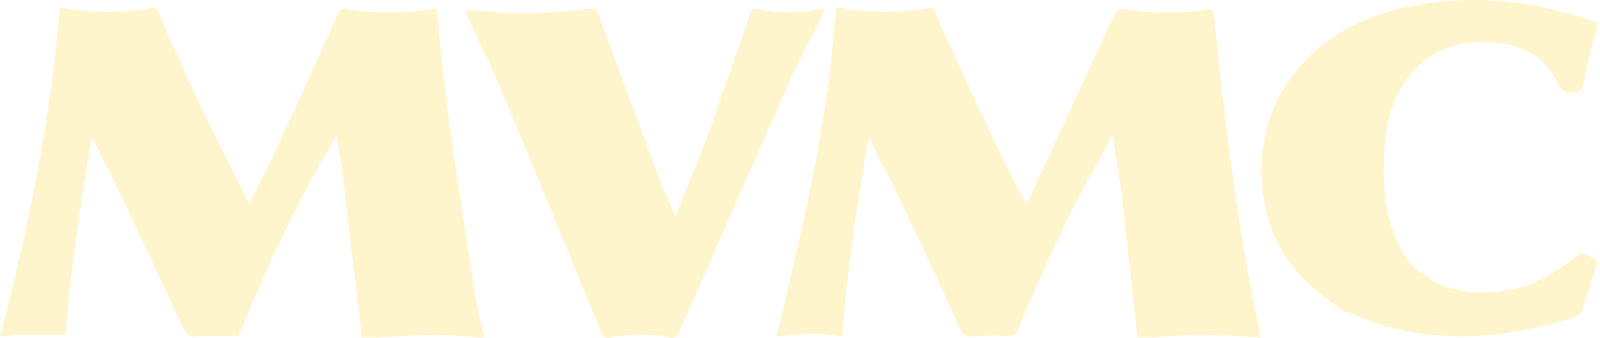 MVMC watermark